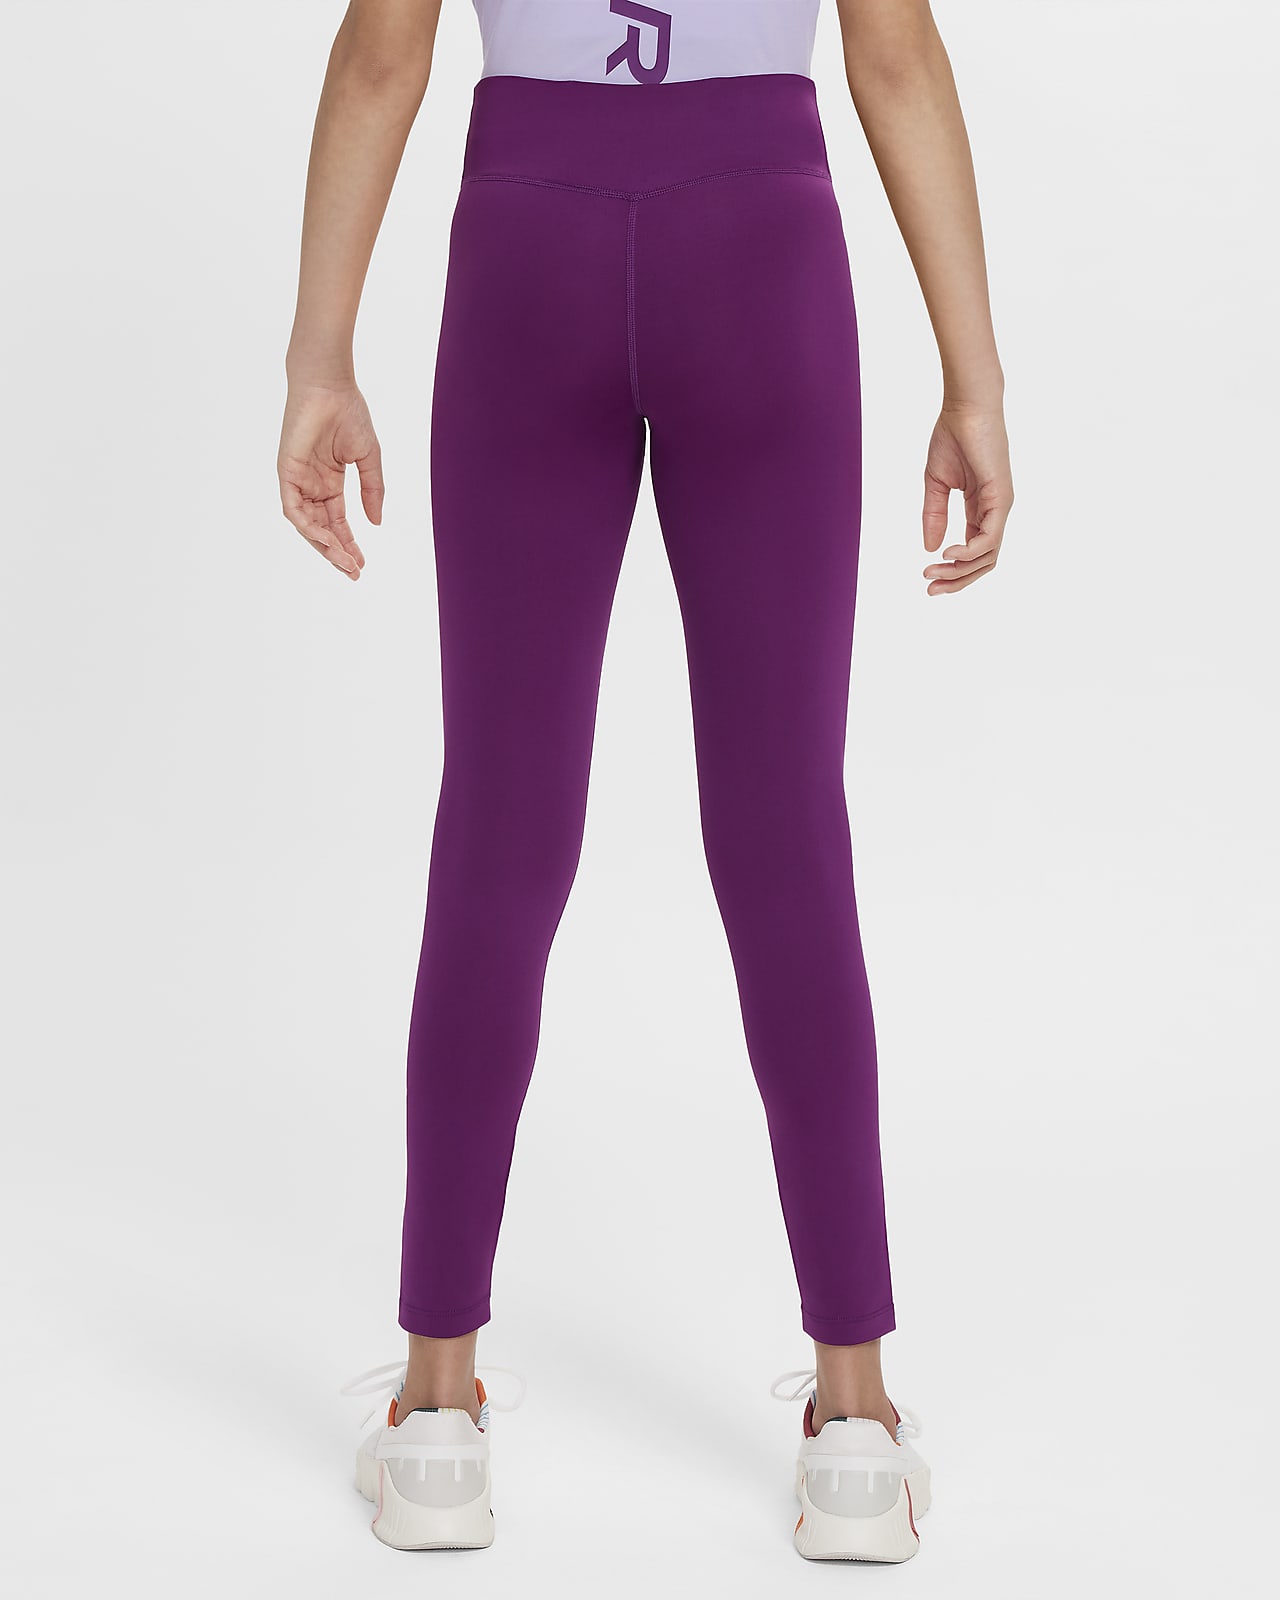 Stretch Yoga Pants  Pants for women, Perfect leggings, Nike yoga